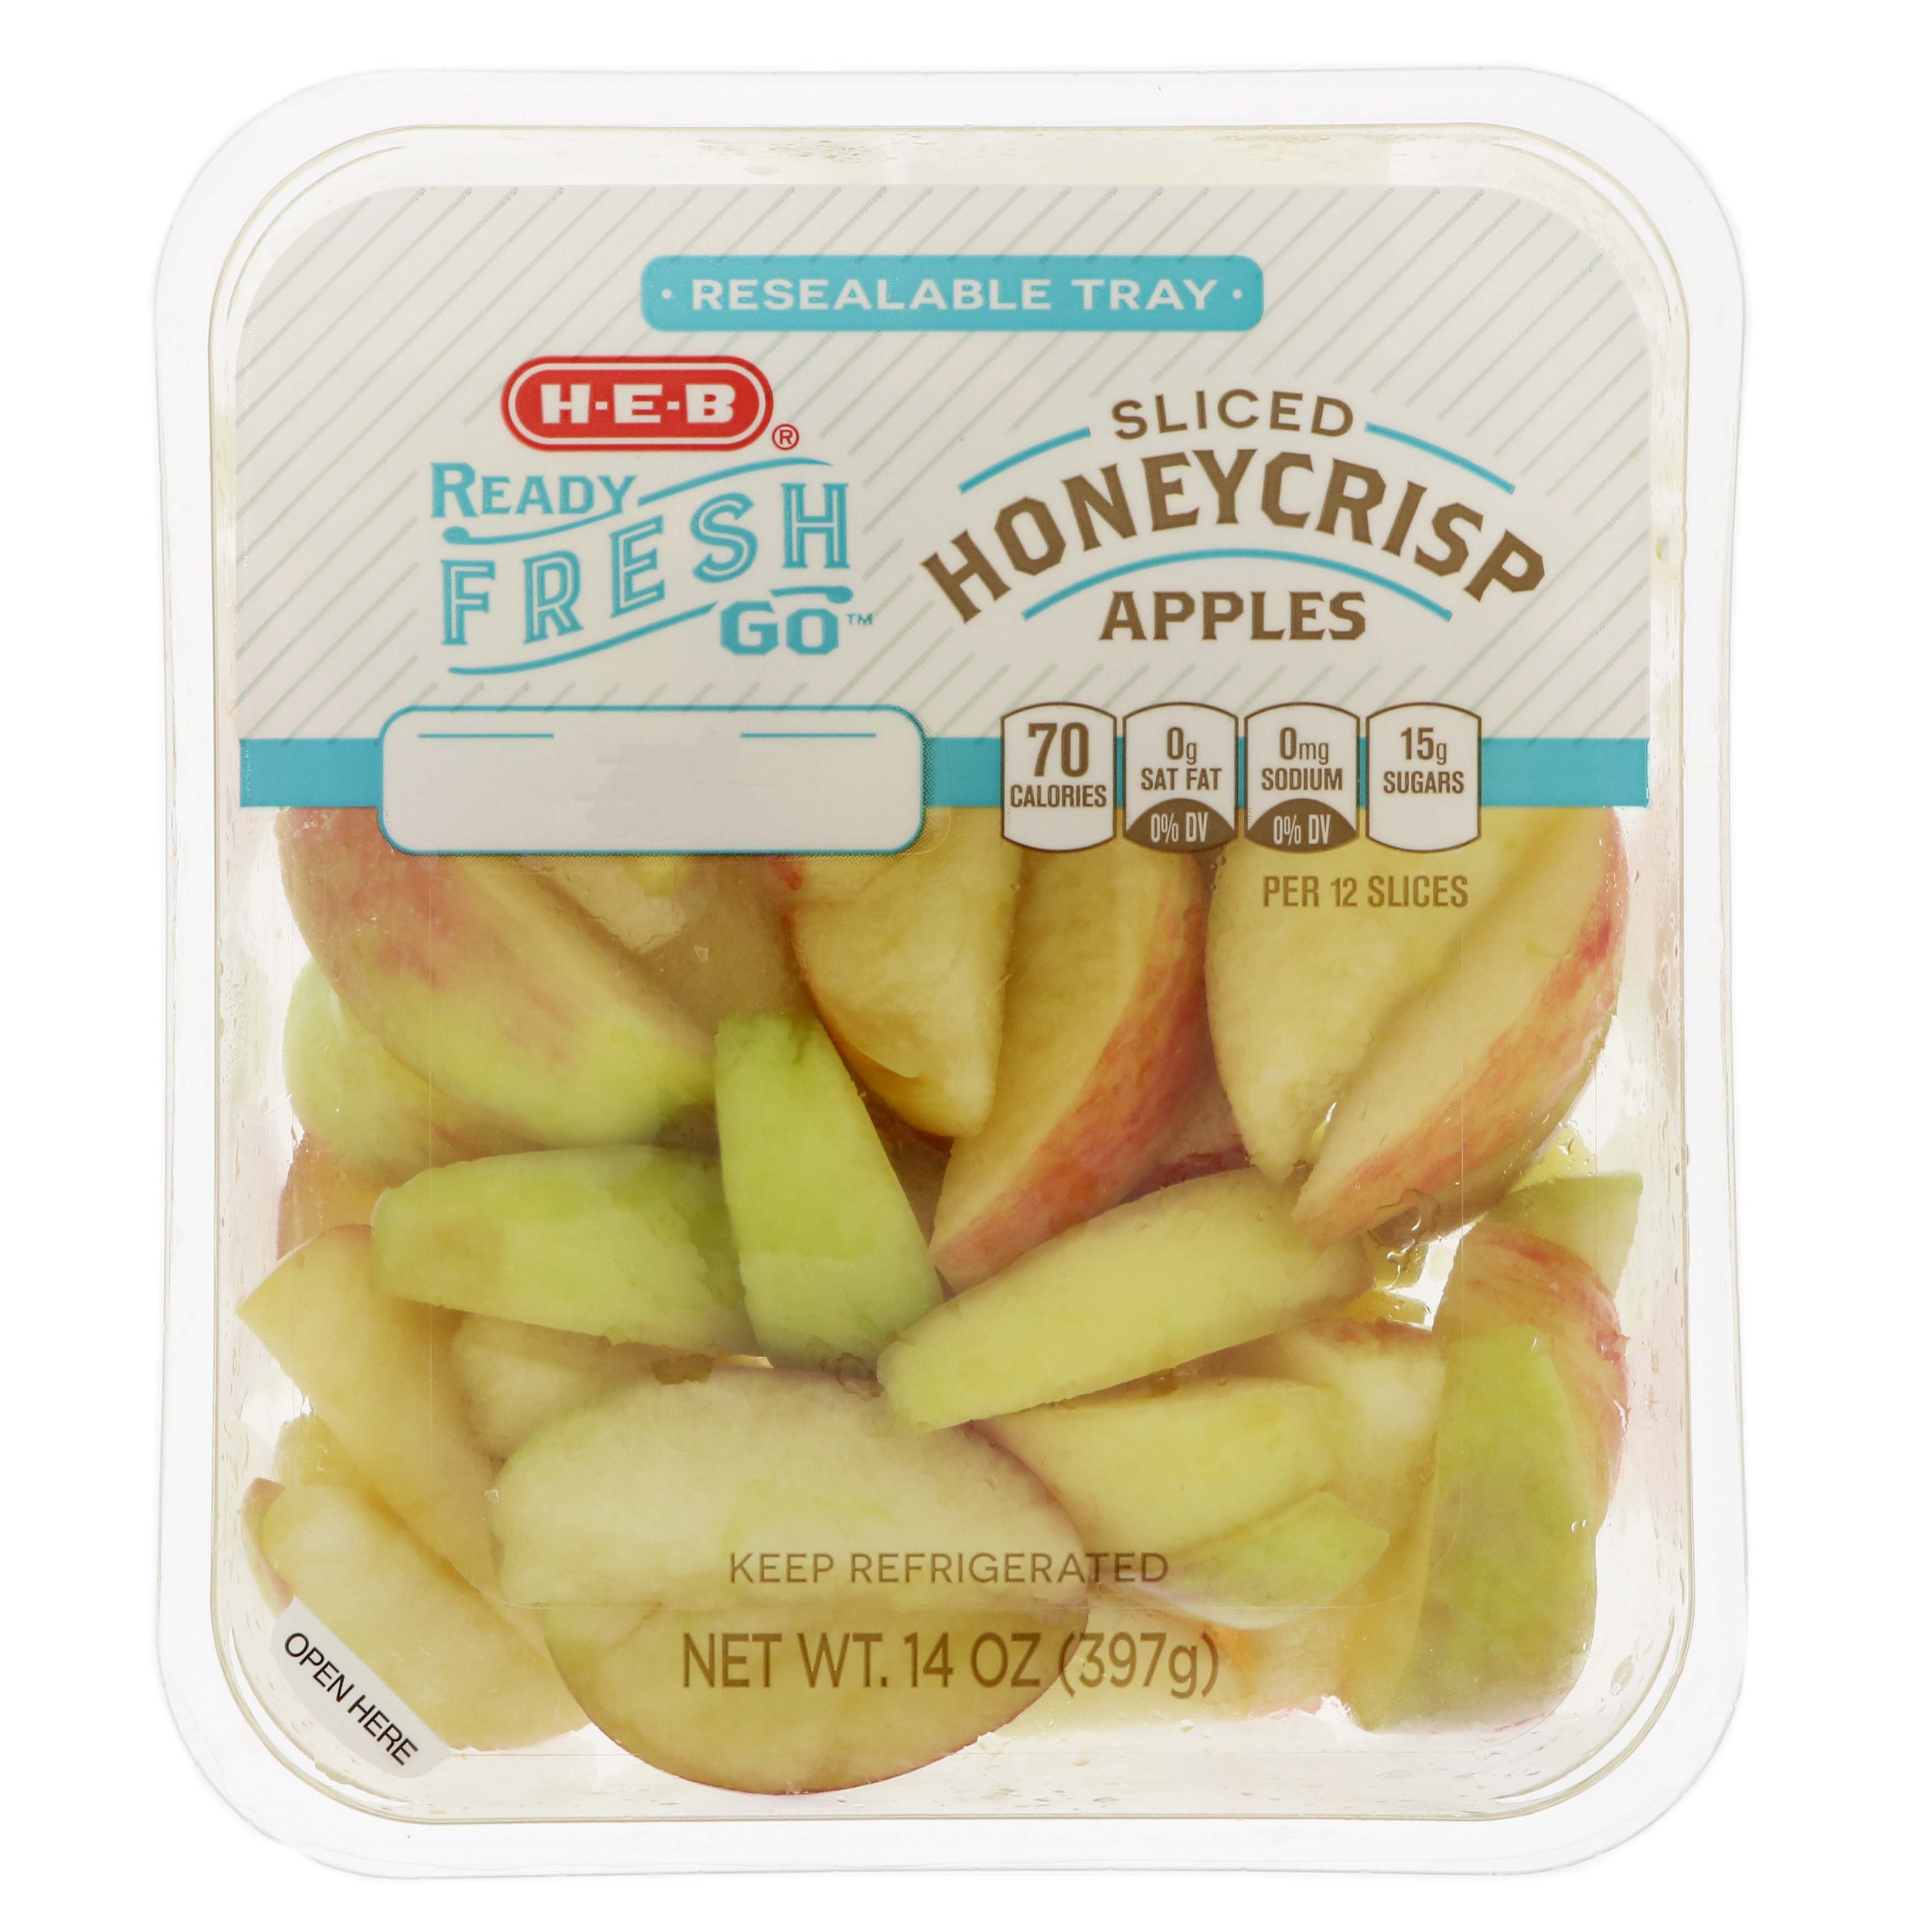 H-E-B Sliced Honeycrisp Apples - Shop Apples at H-E-B